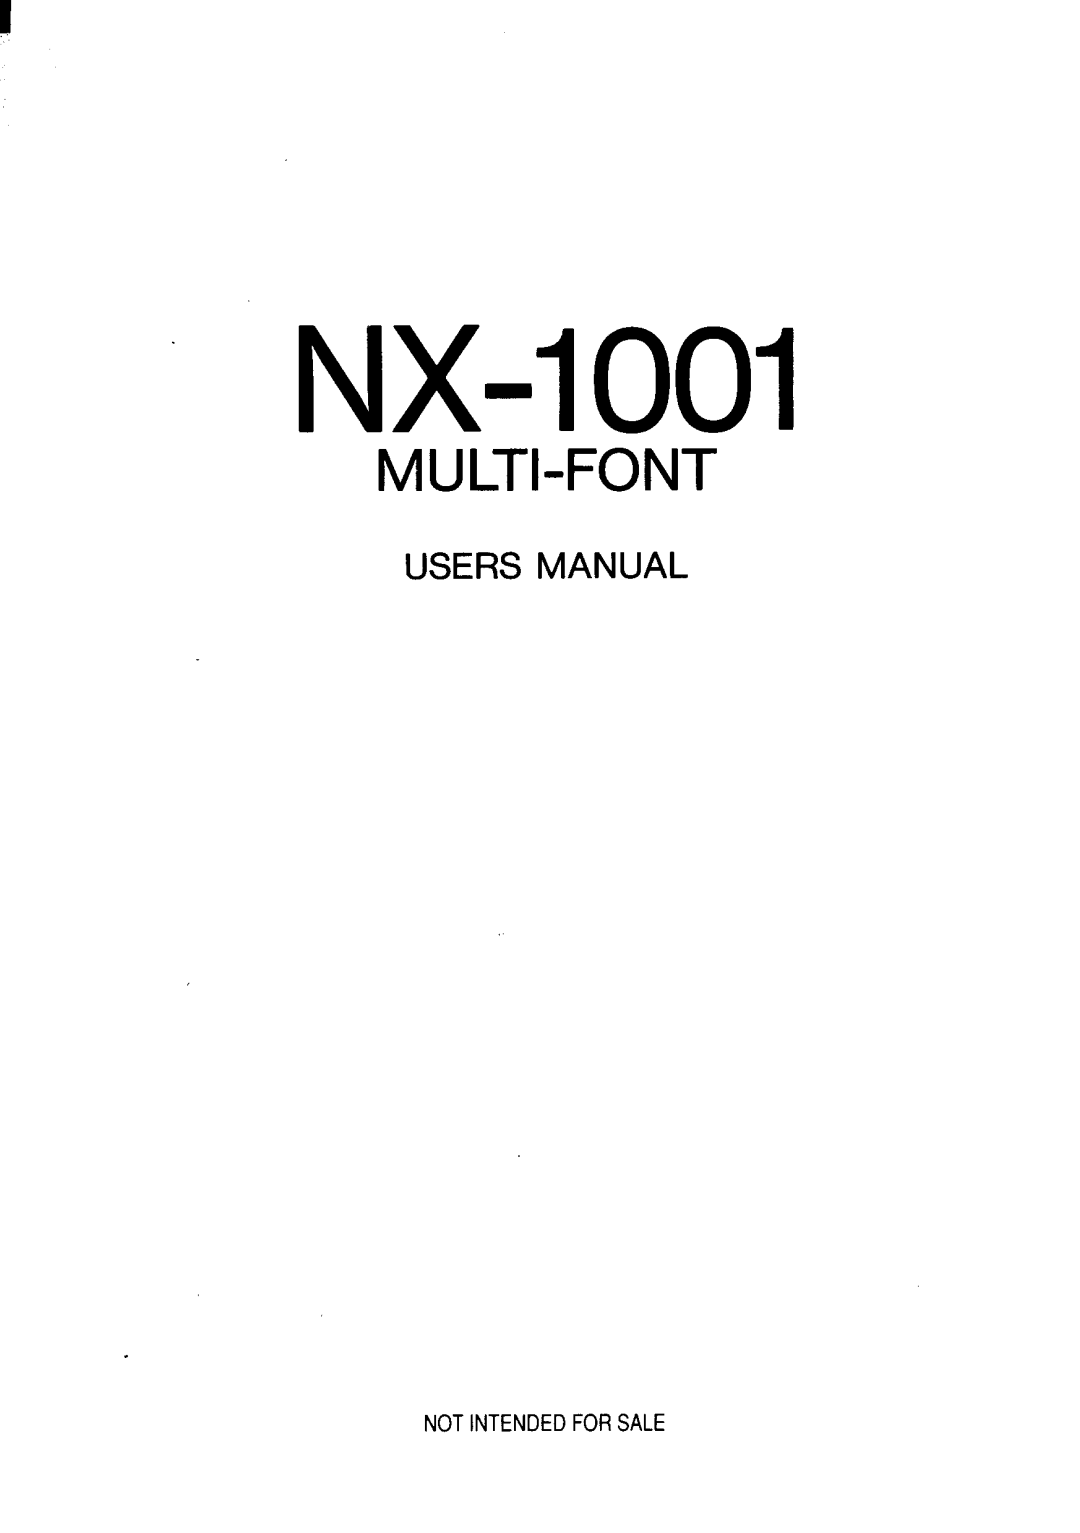 Star Micronics NX-1001 manual N I F S 